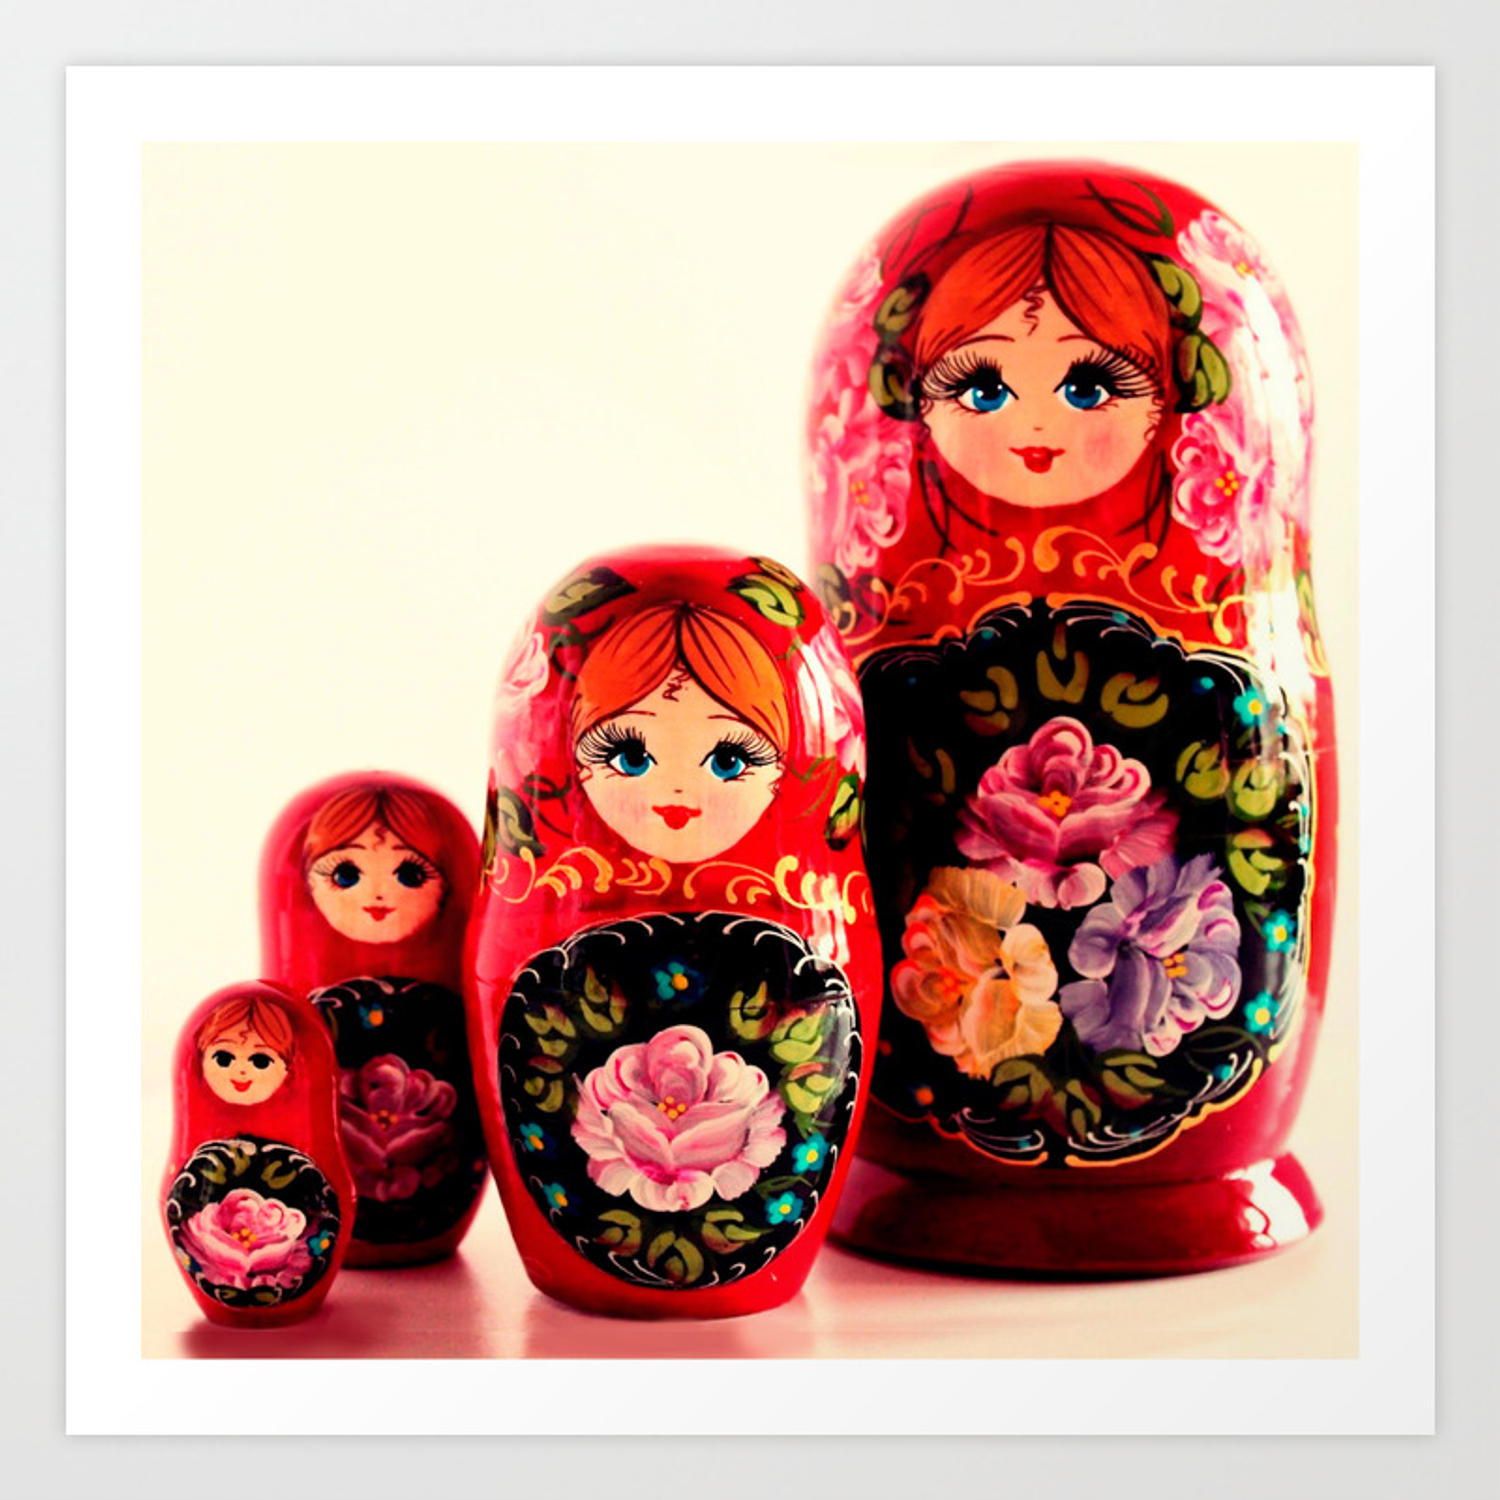 Matryoshka Doll Wallpapers